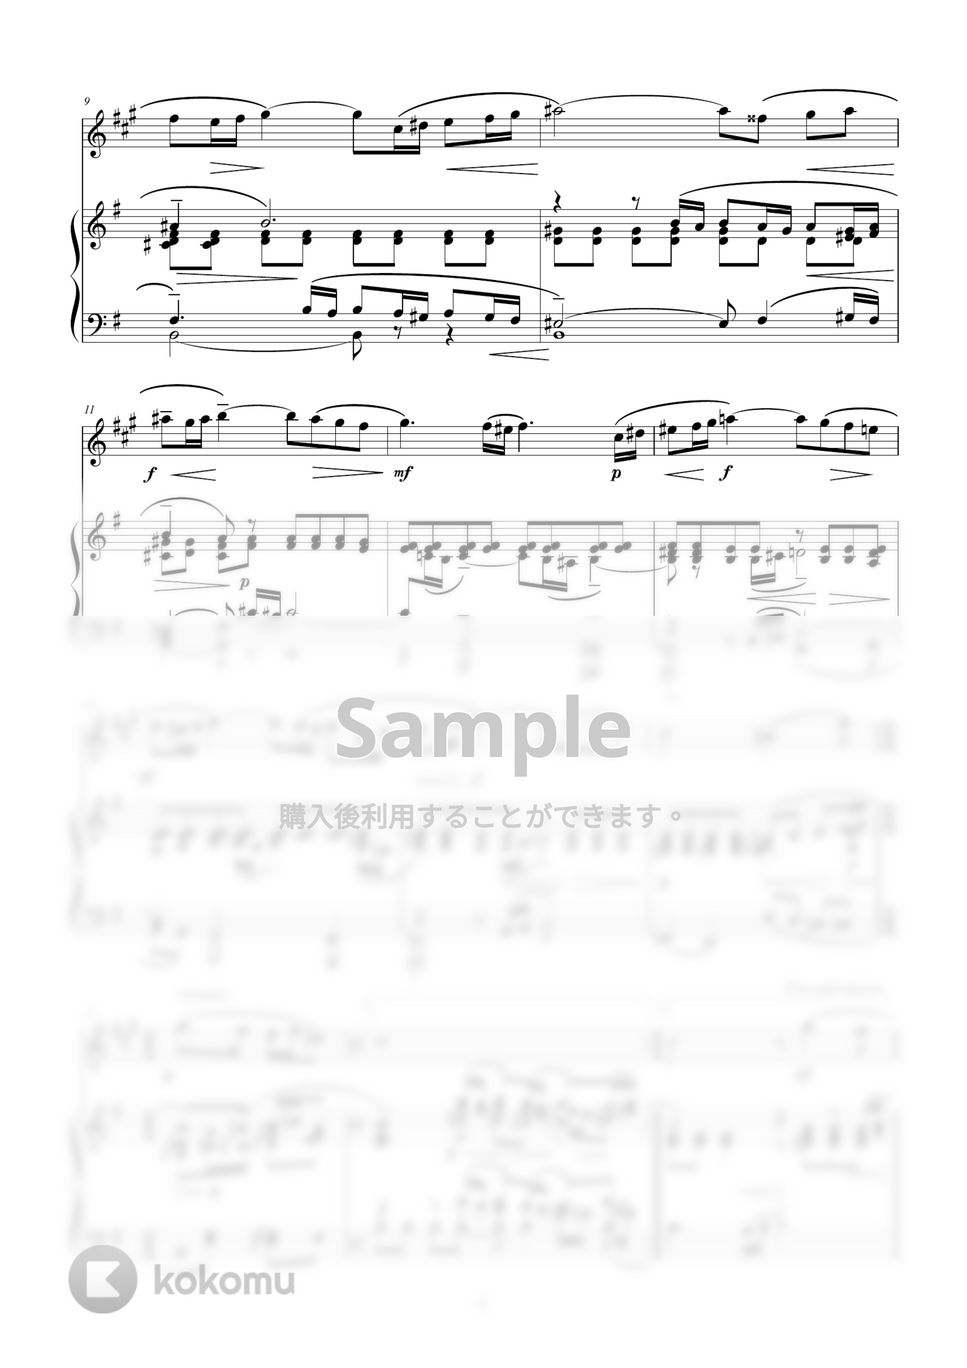 Rachmaninoff - Vocalise Op.34,No.14 / for Tenor Sax and Piano (ヴォカリーズ/ラフマニノフ/ピアノ/テナーサックス/サックス) by Zoe